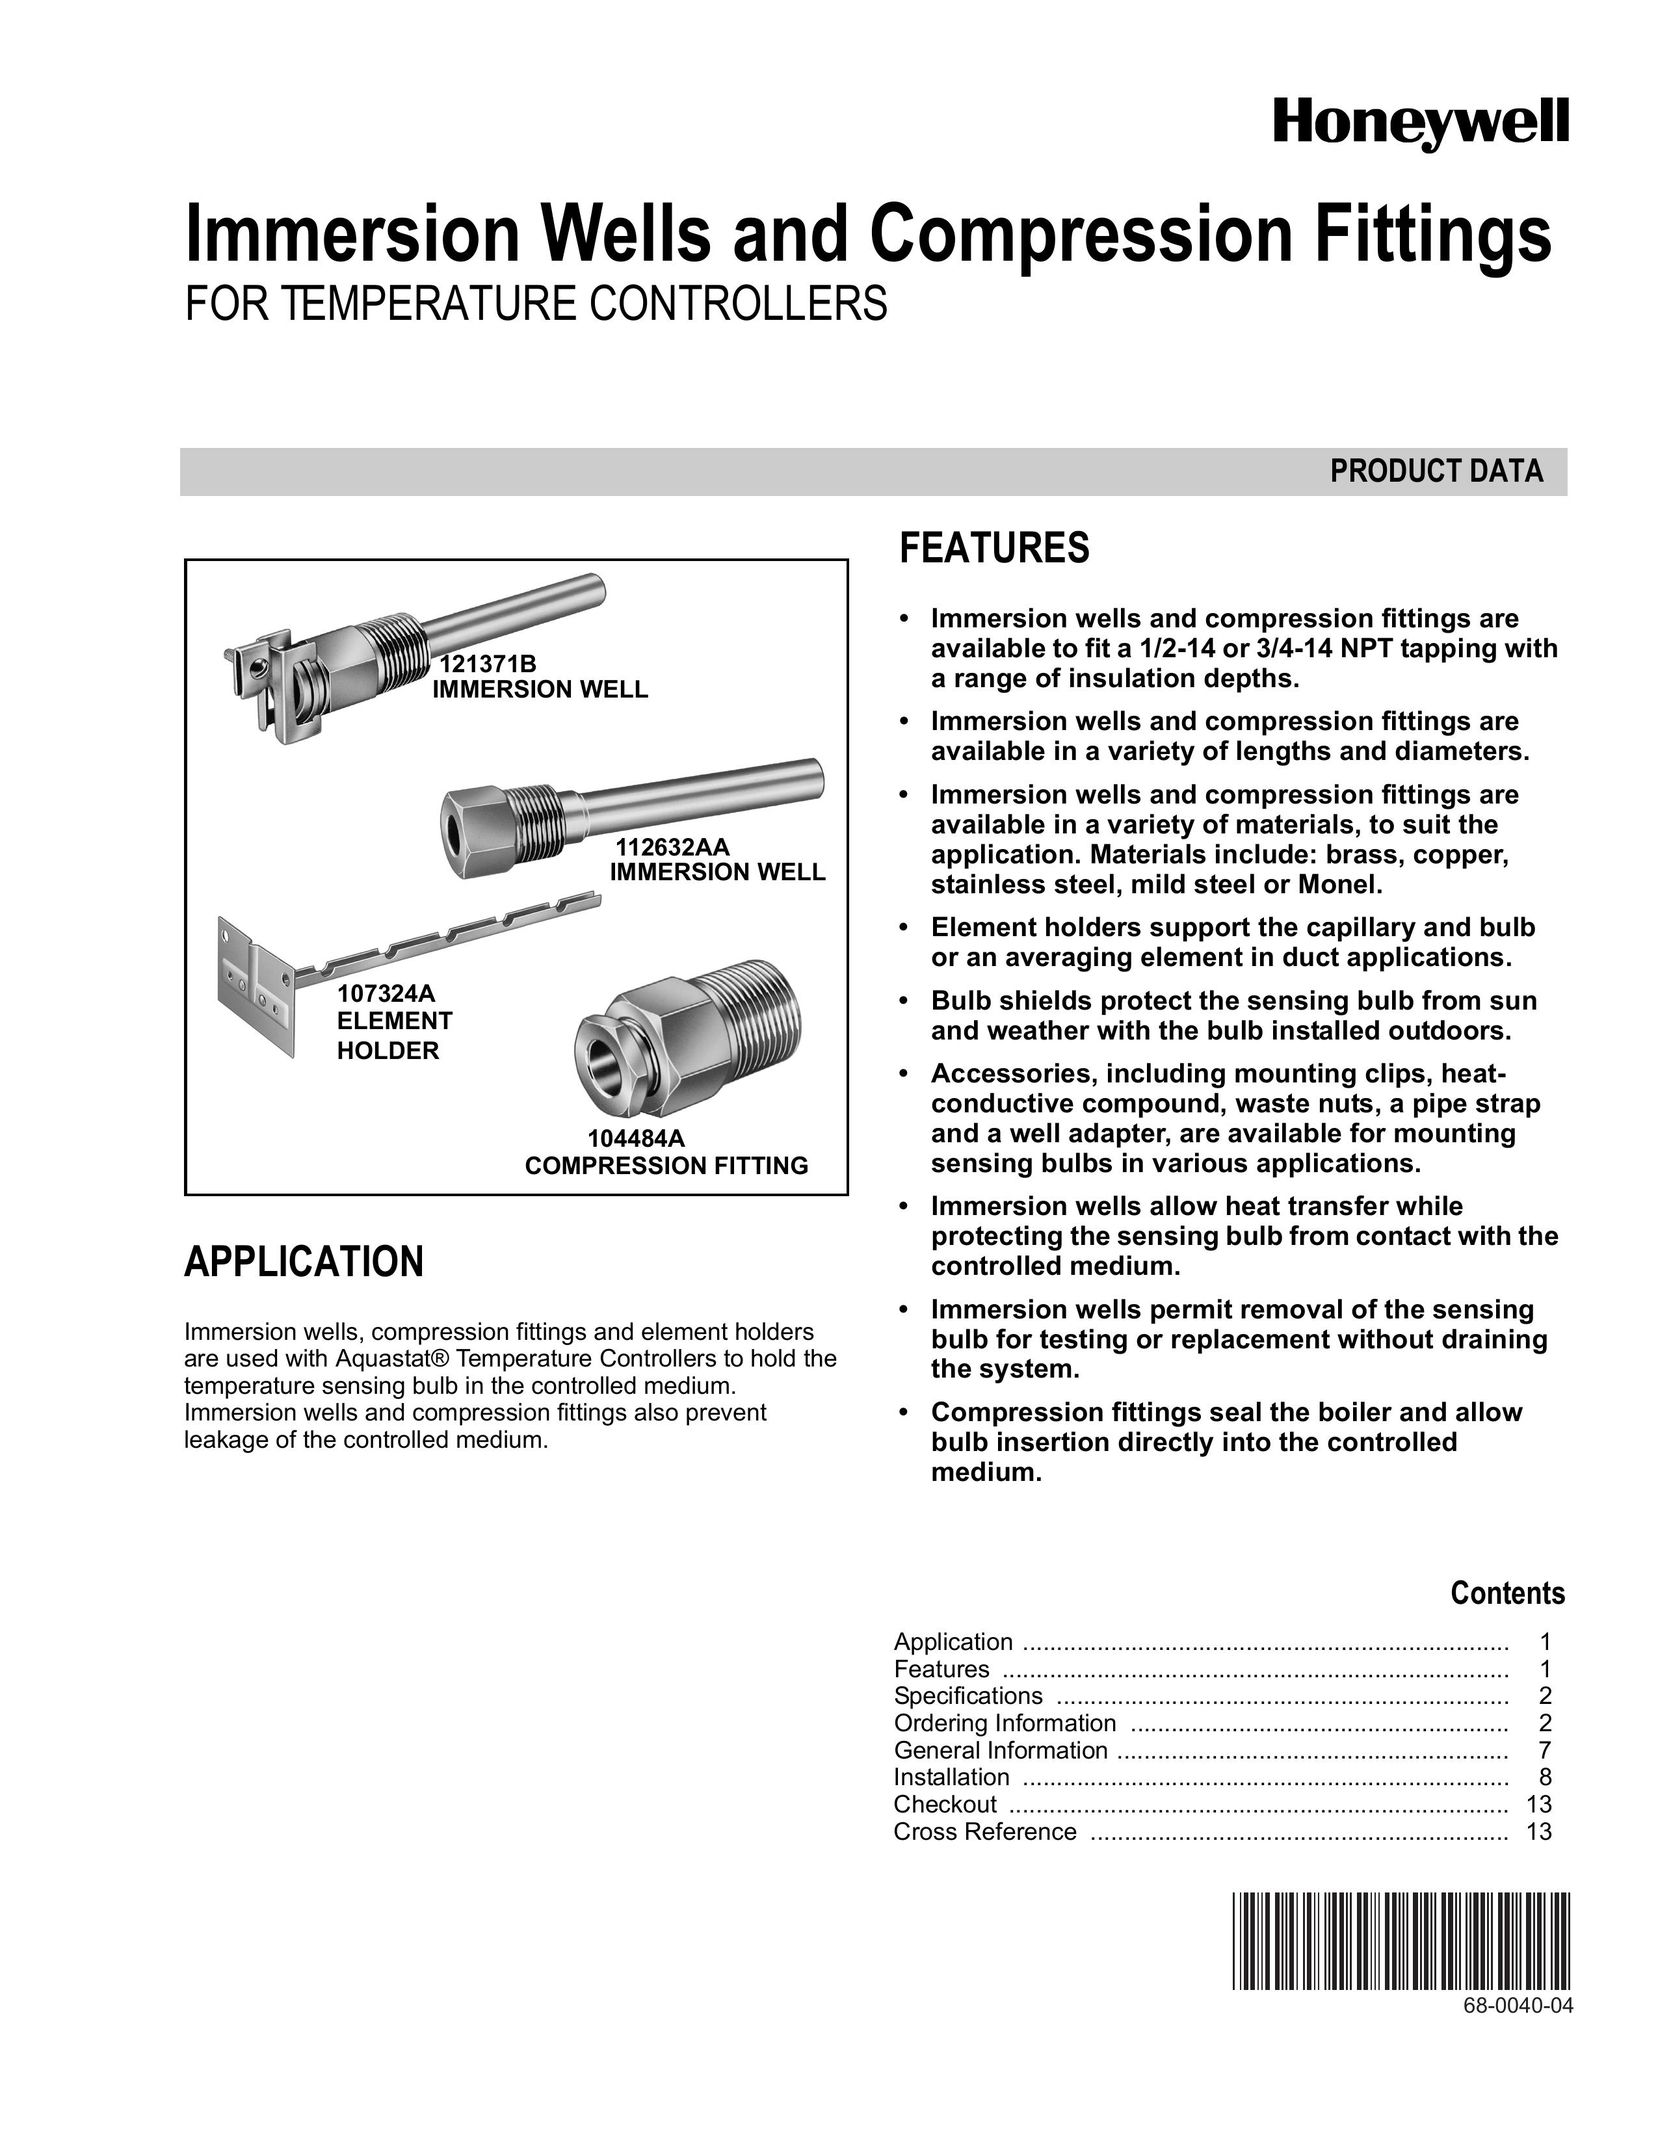 Honeywell 104484A Plumbing Product User Manual